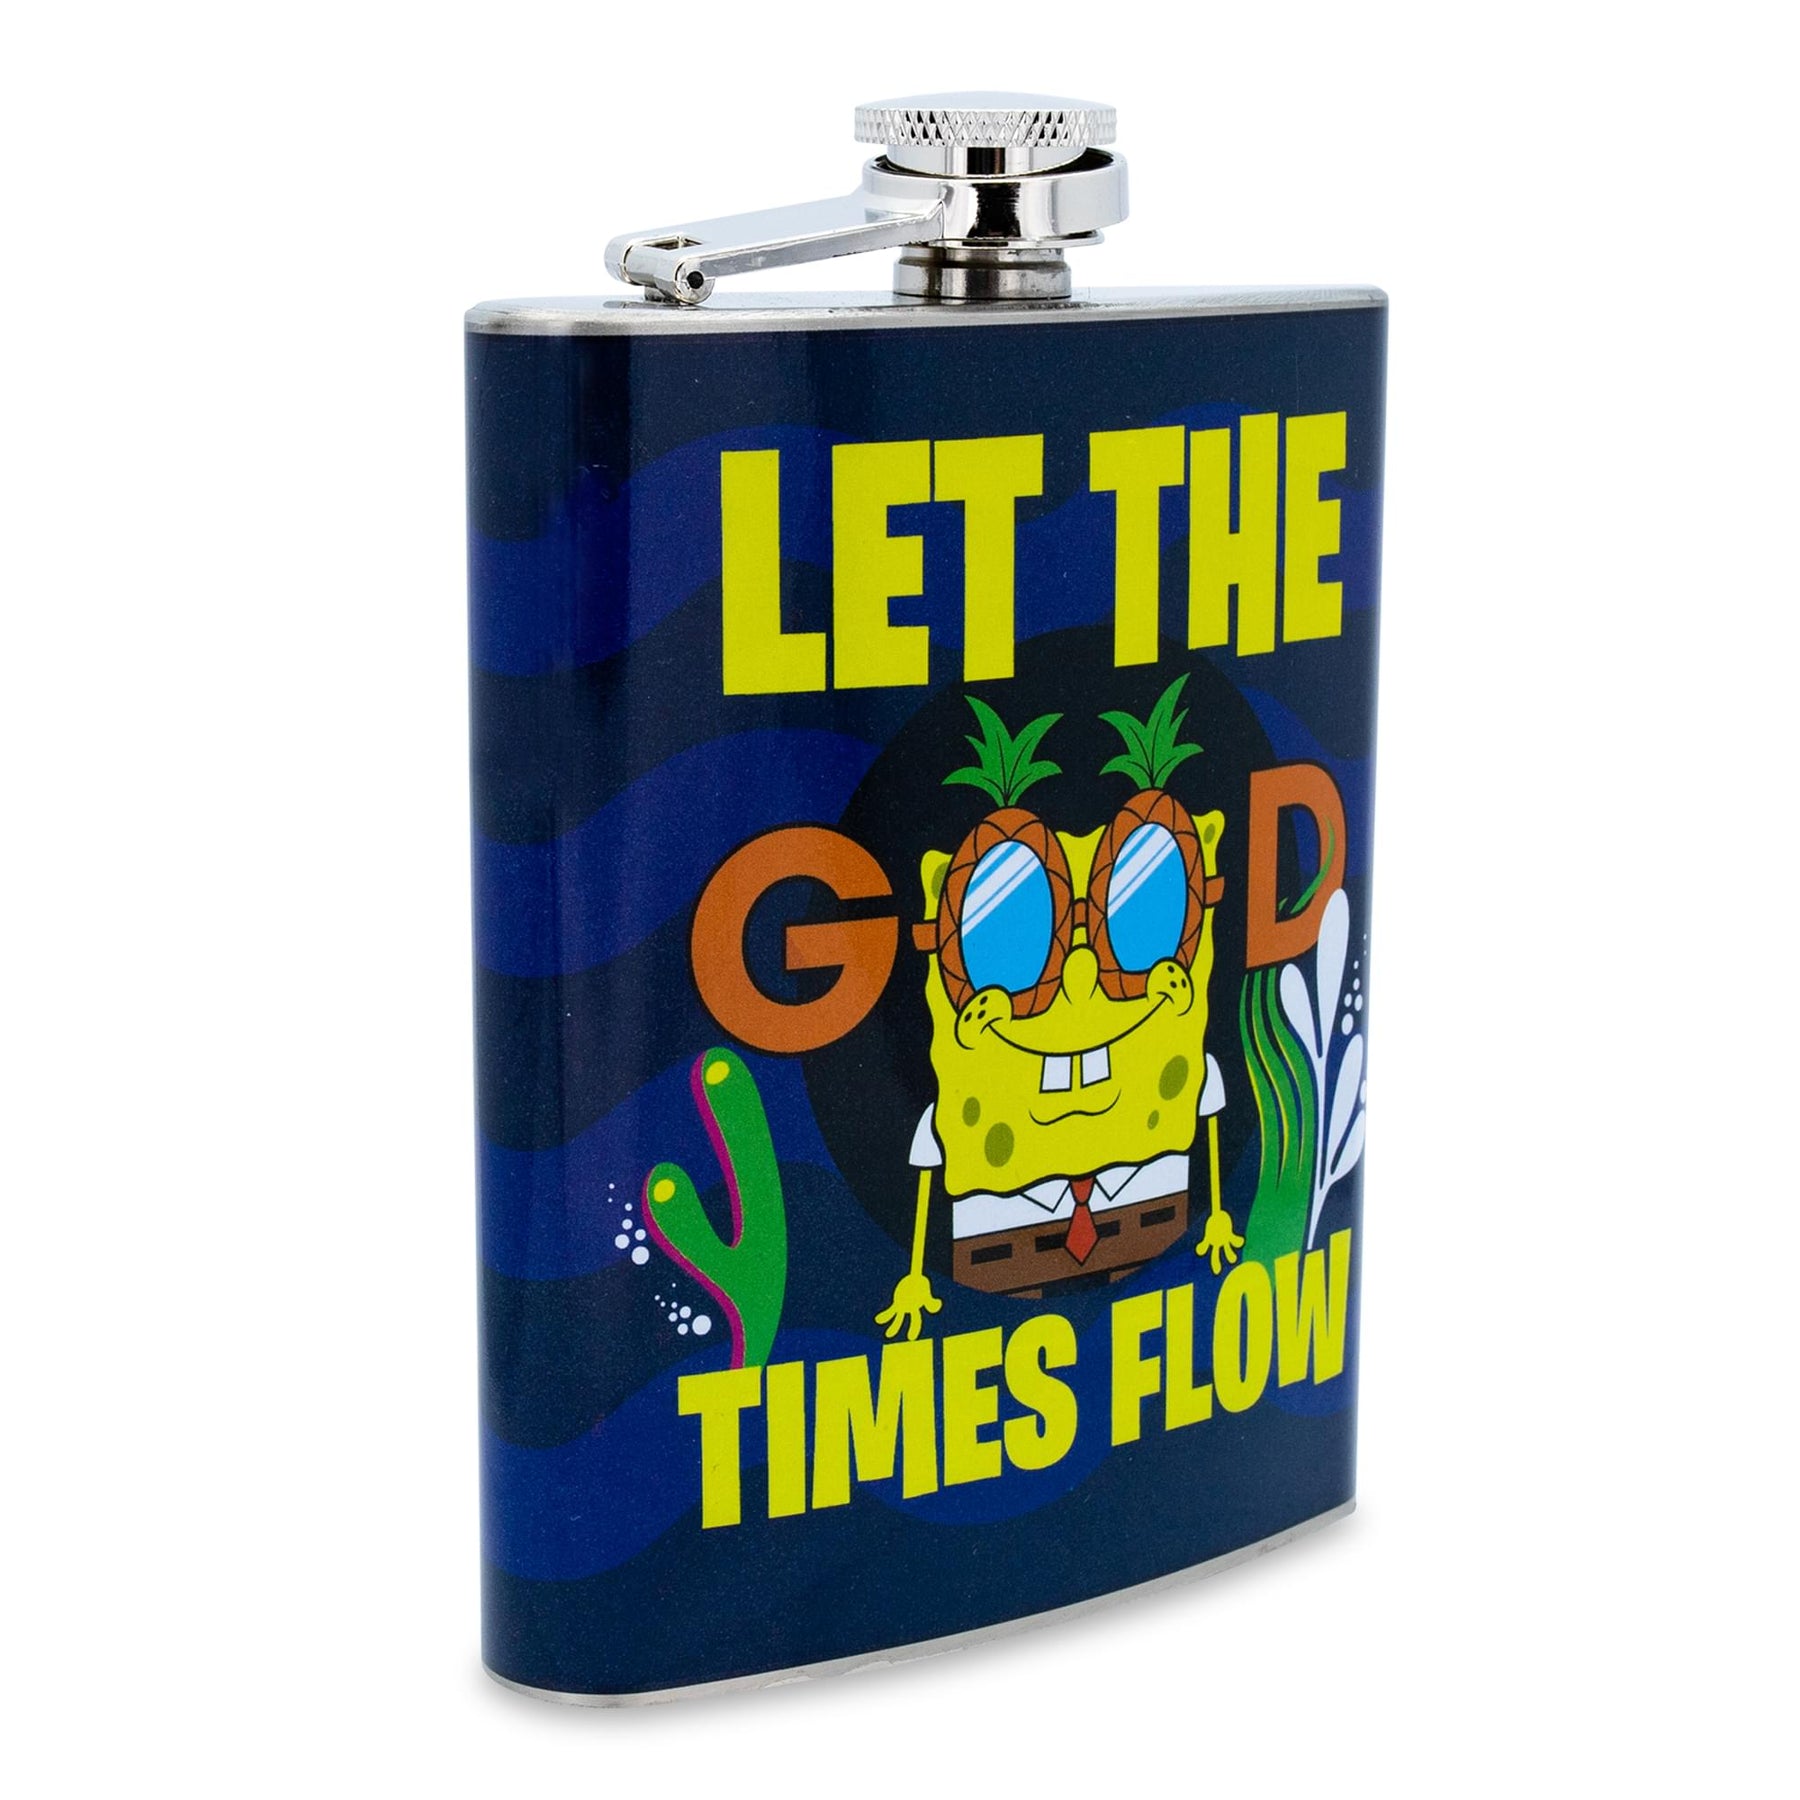 SpongeBob SquarePants "Mister Good Times" Stainless Steel Flask | Holds 7 Ounces